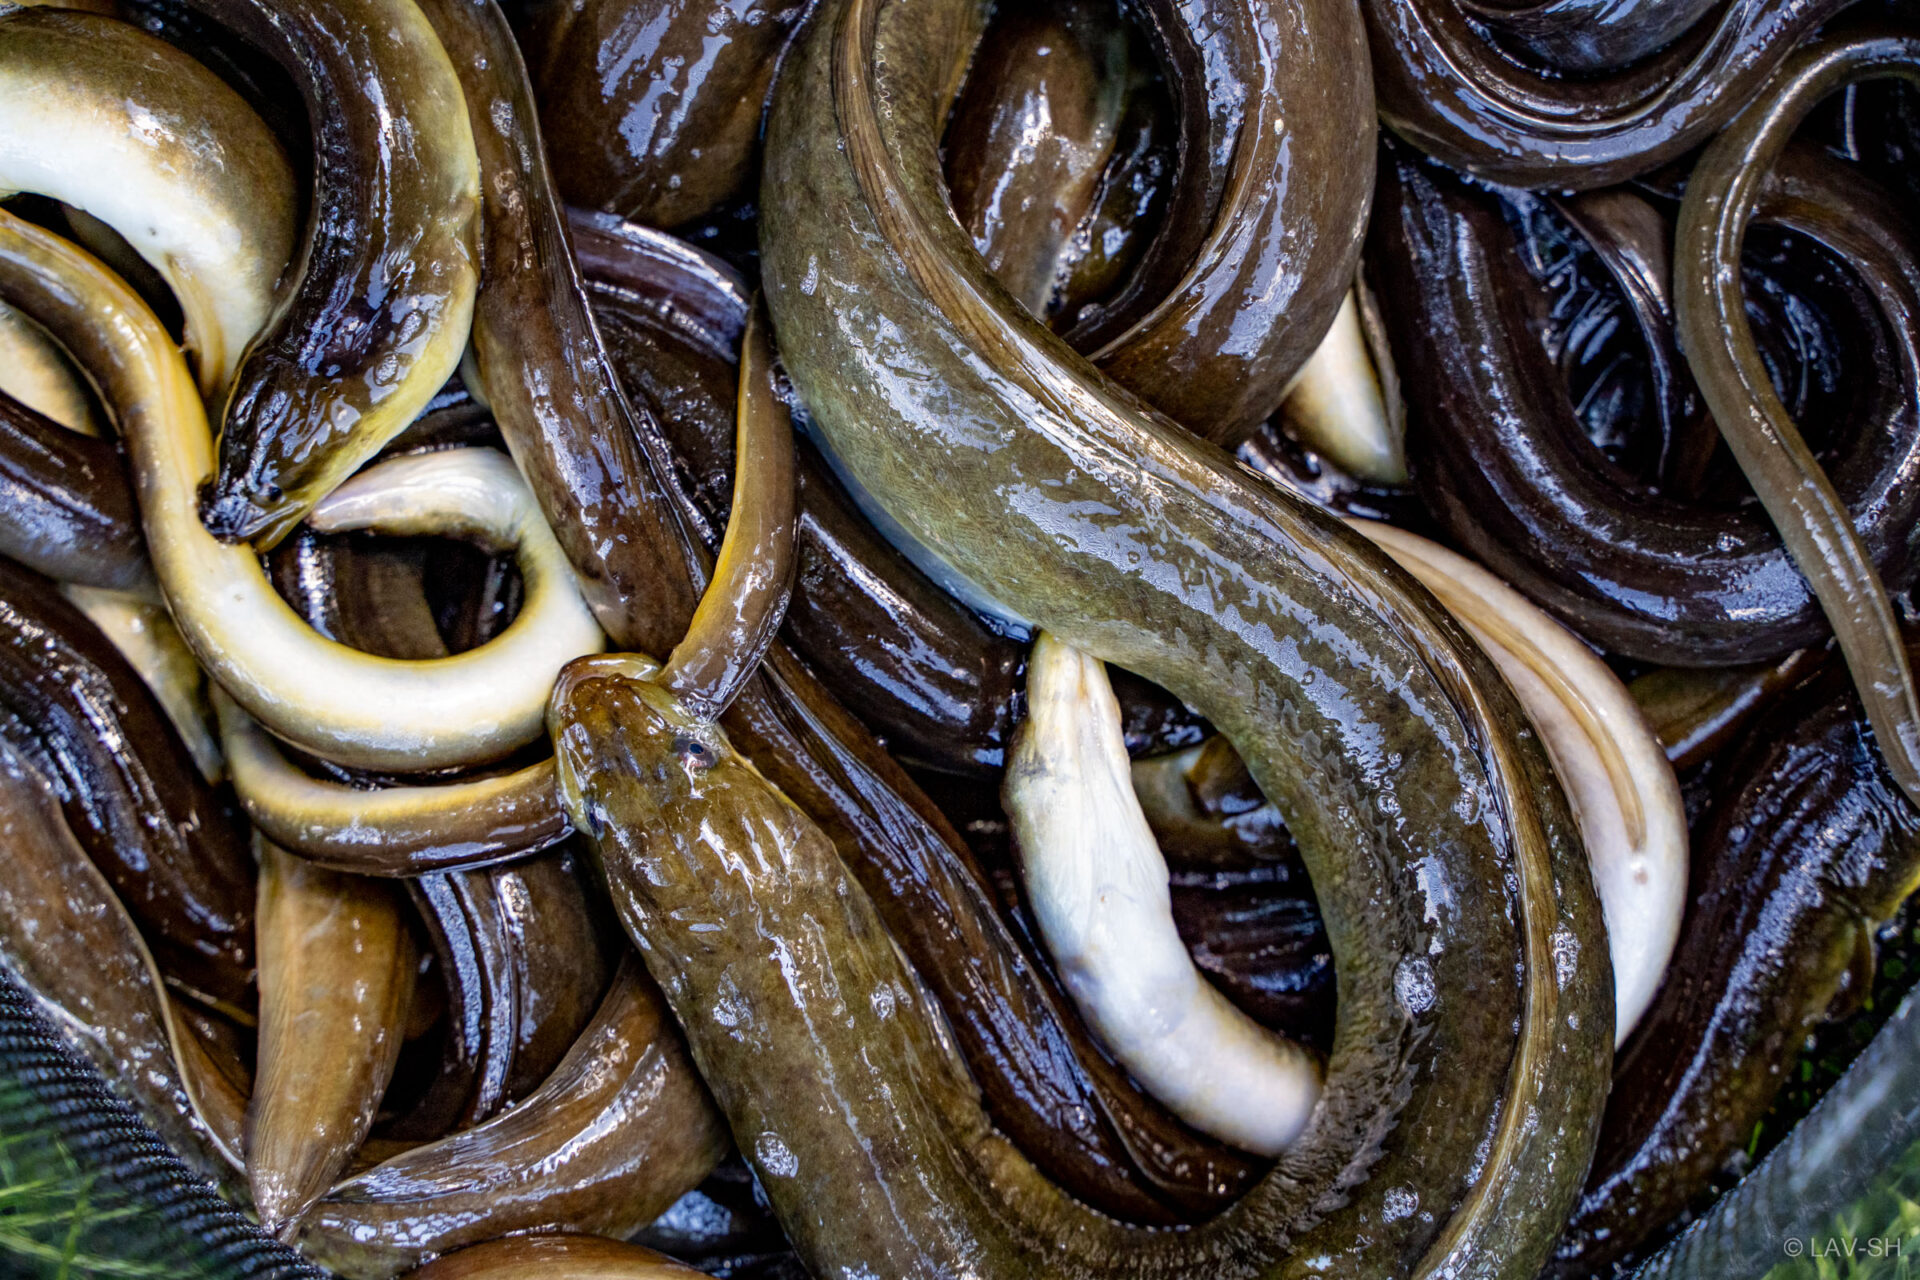 An vielen Fangstationen war das Wiegenetz gut gefüllt mit Aalen aller Größen.